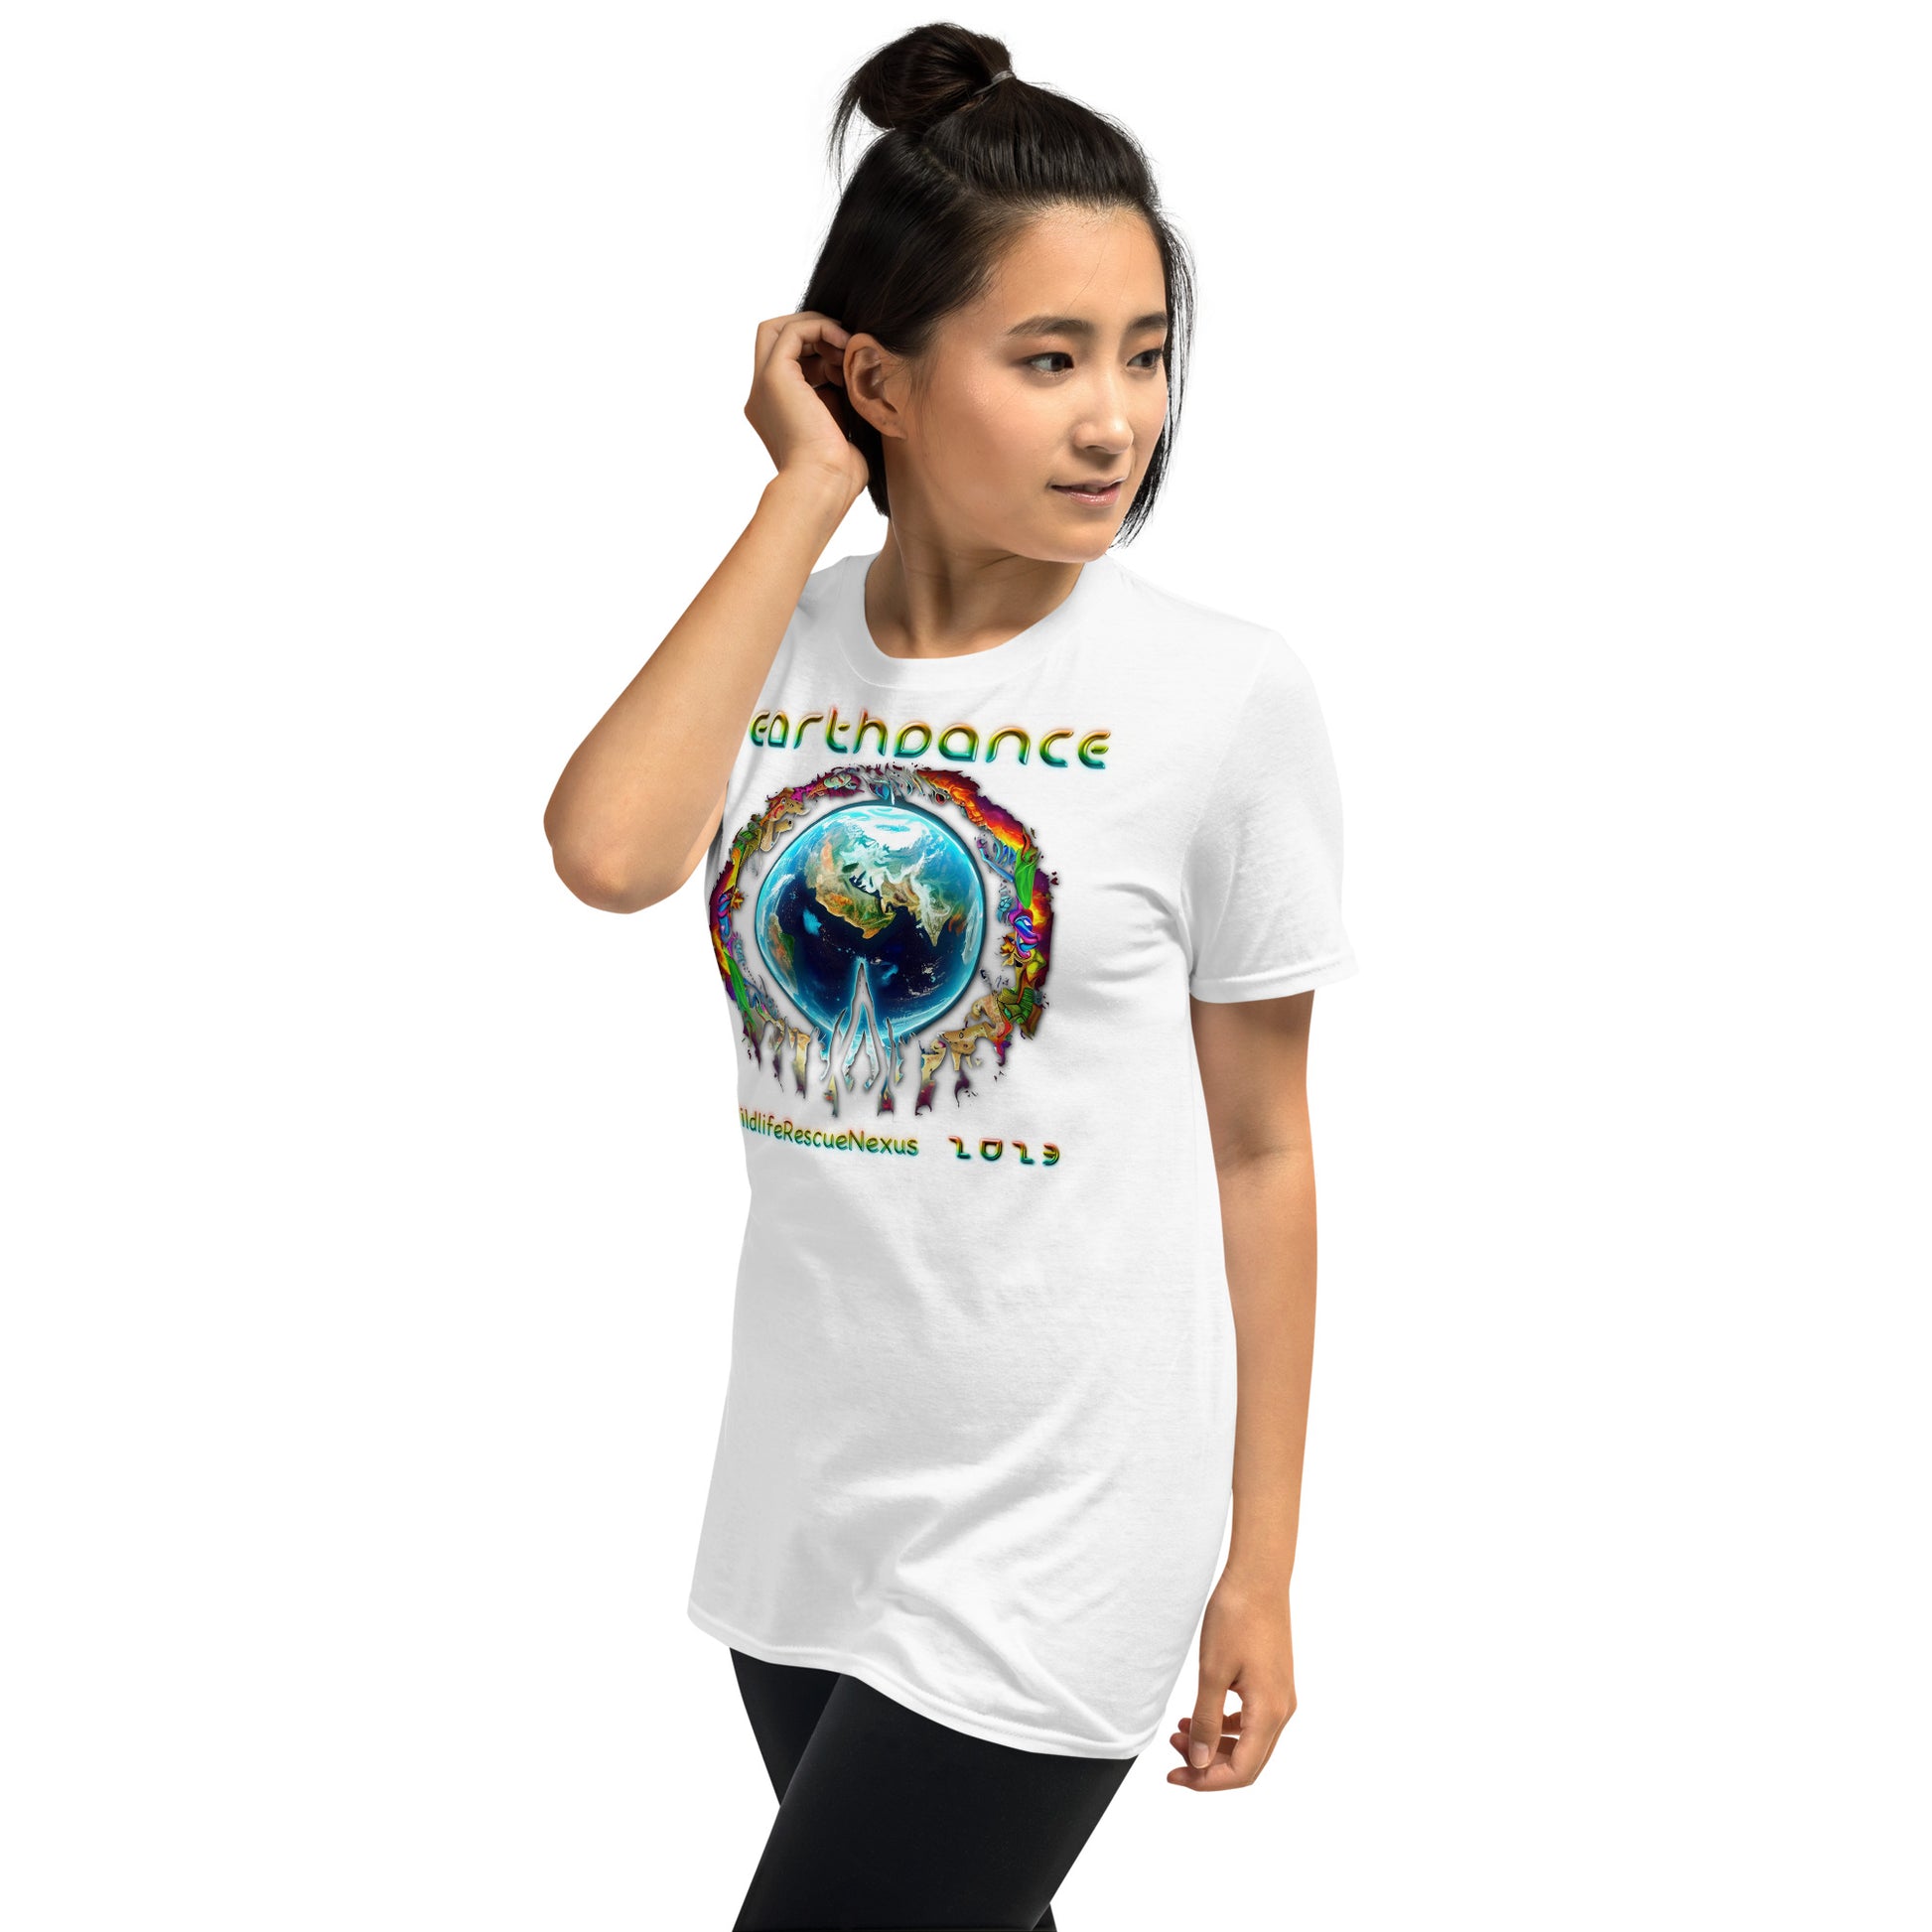 Earthdance 2023 - EKB v1 - Limited Edition - Short-Sleeve Unisex T-Shirt - The Foundation of Families